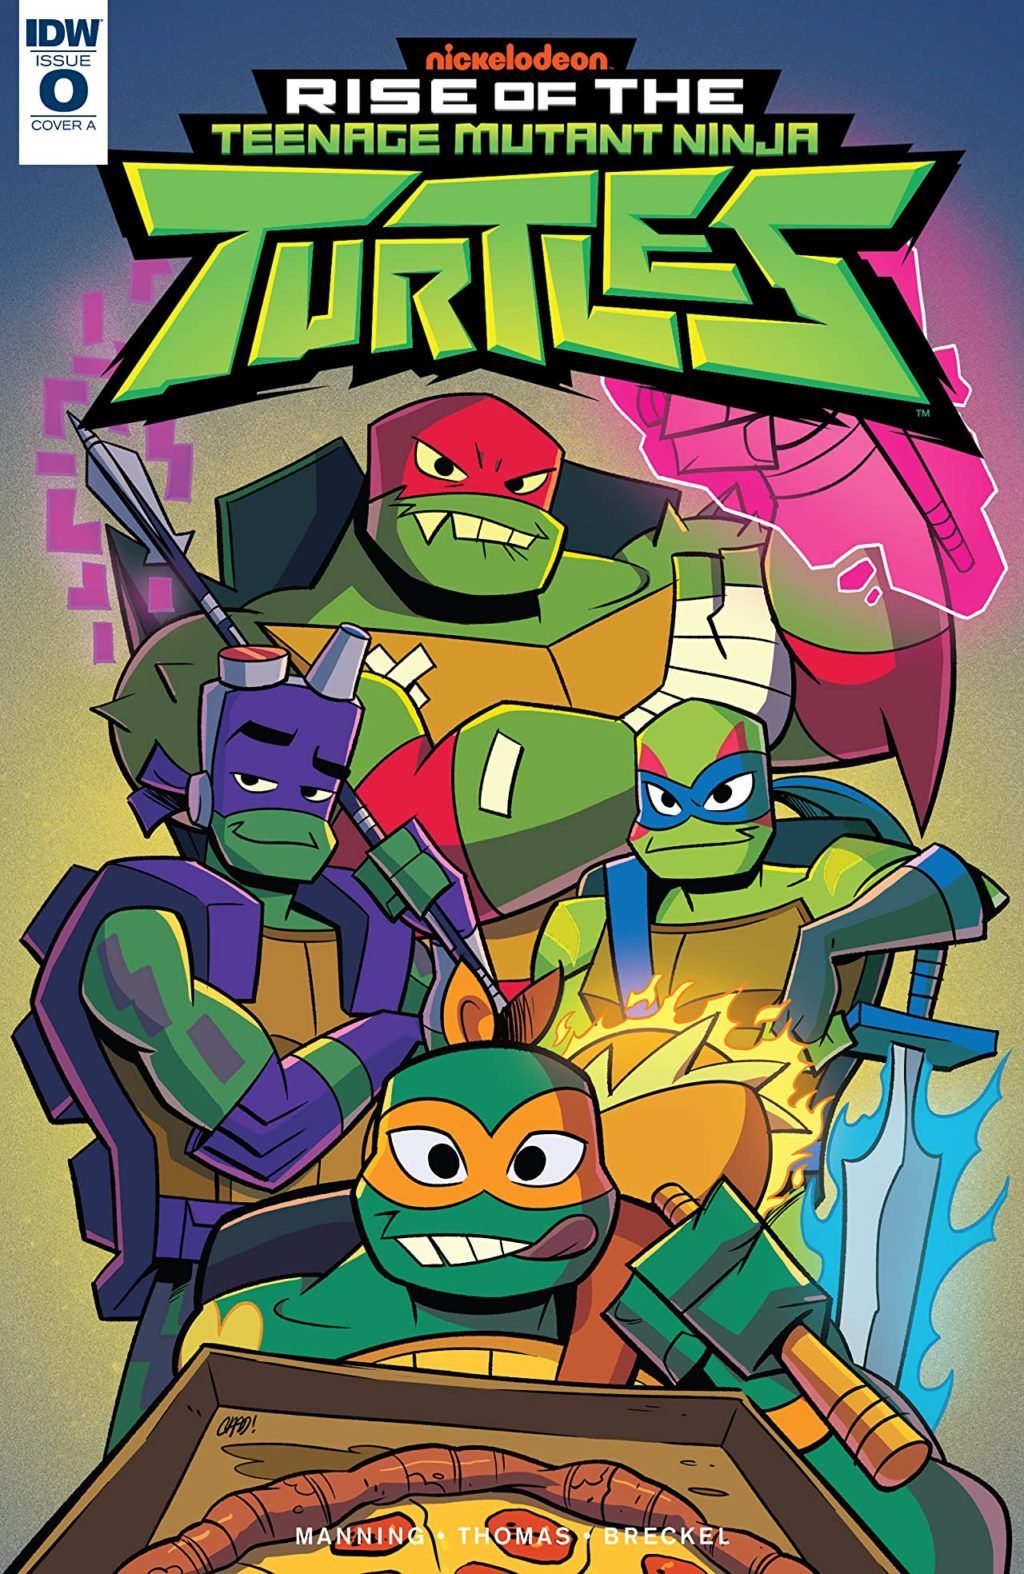 REVIEW: Rise of the Teenage Mutant Ninja Turtles #0 - Comic Crusaders - Rise Of The Teenage Mutant Ninja Turtles